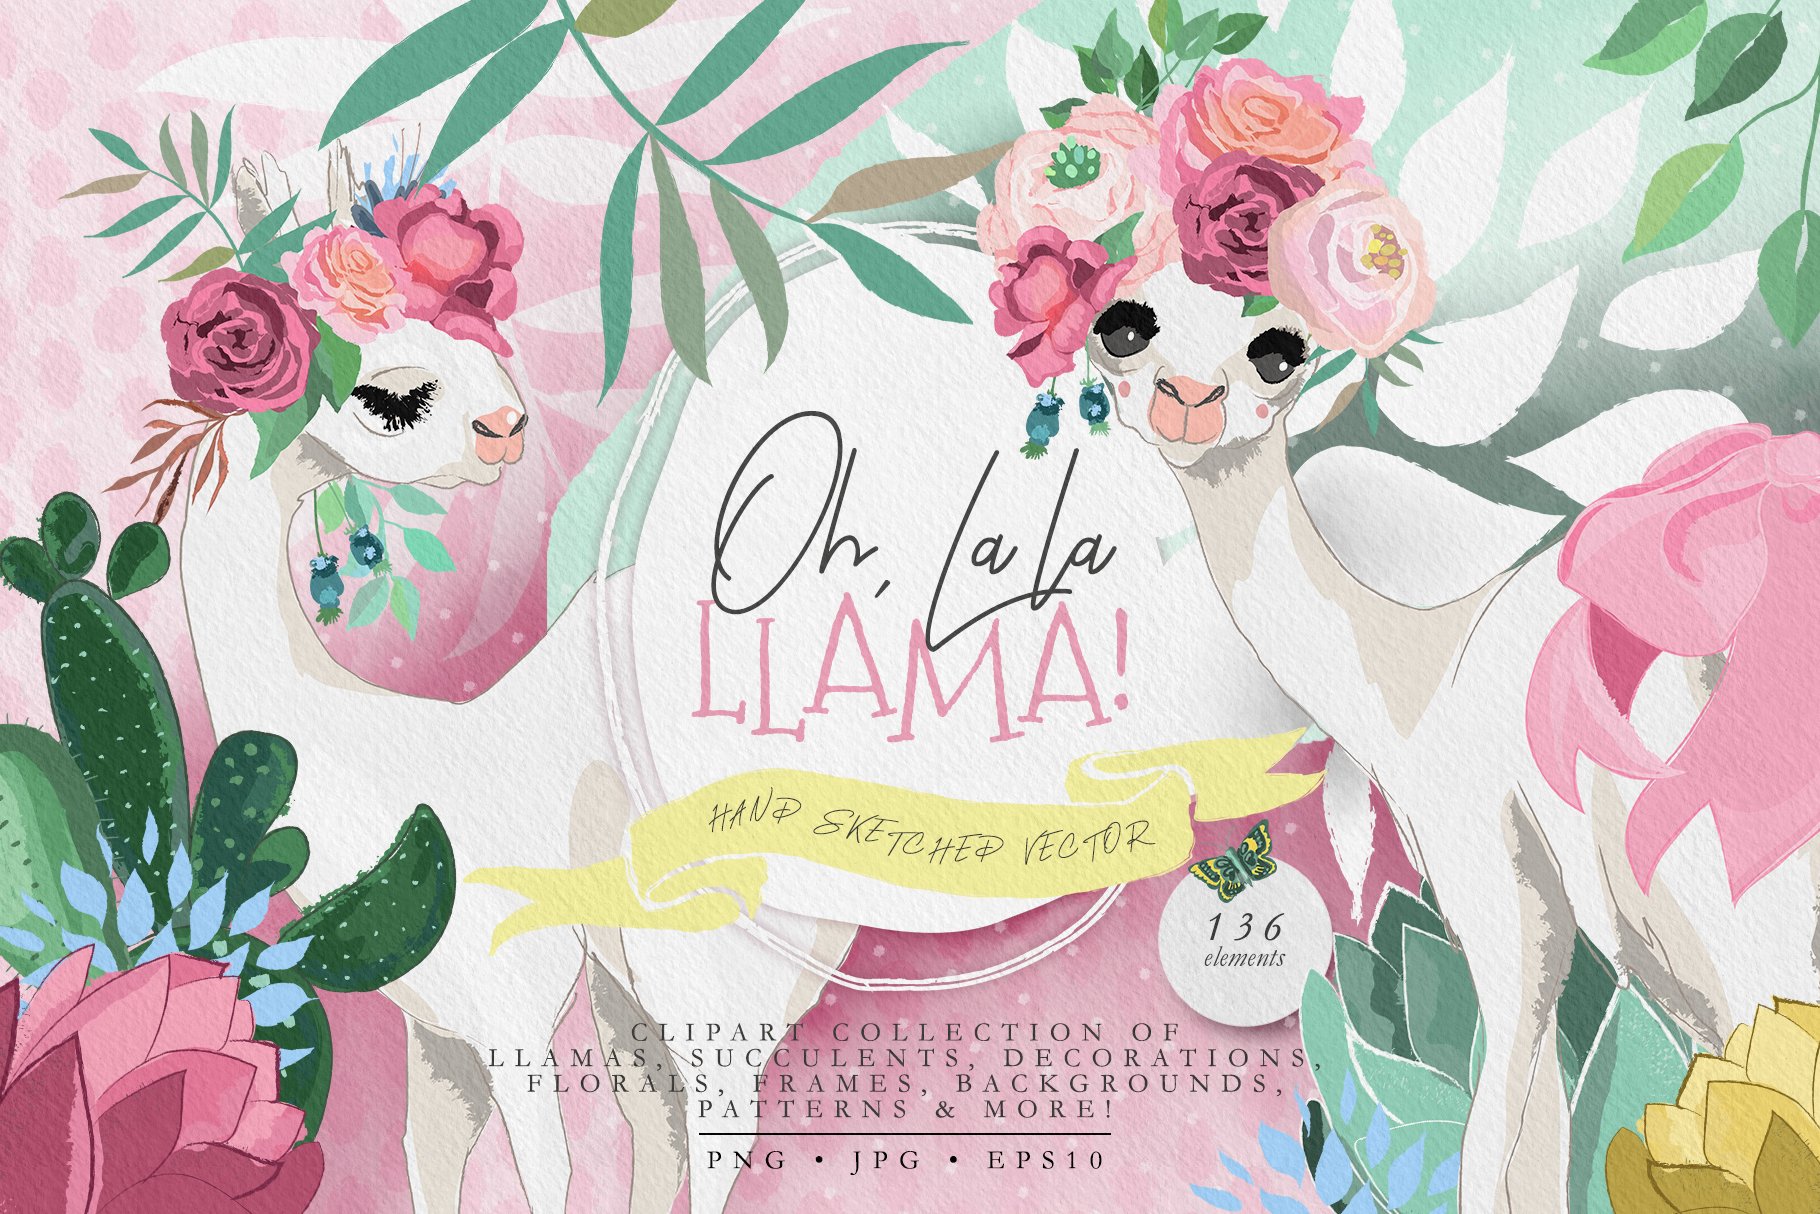 Oh La La Llama cover image.